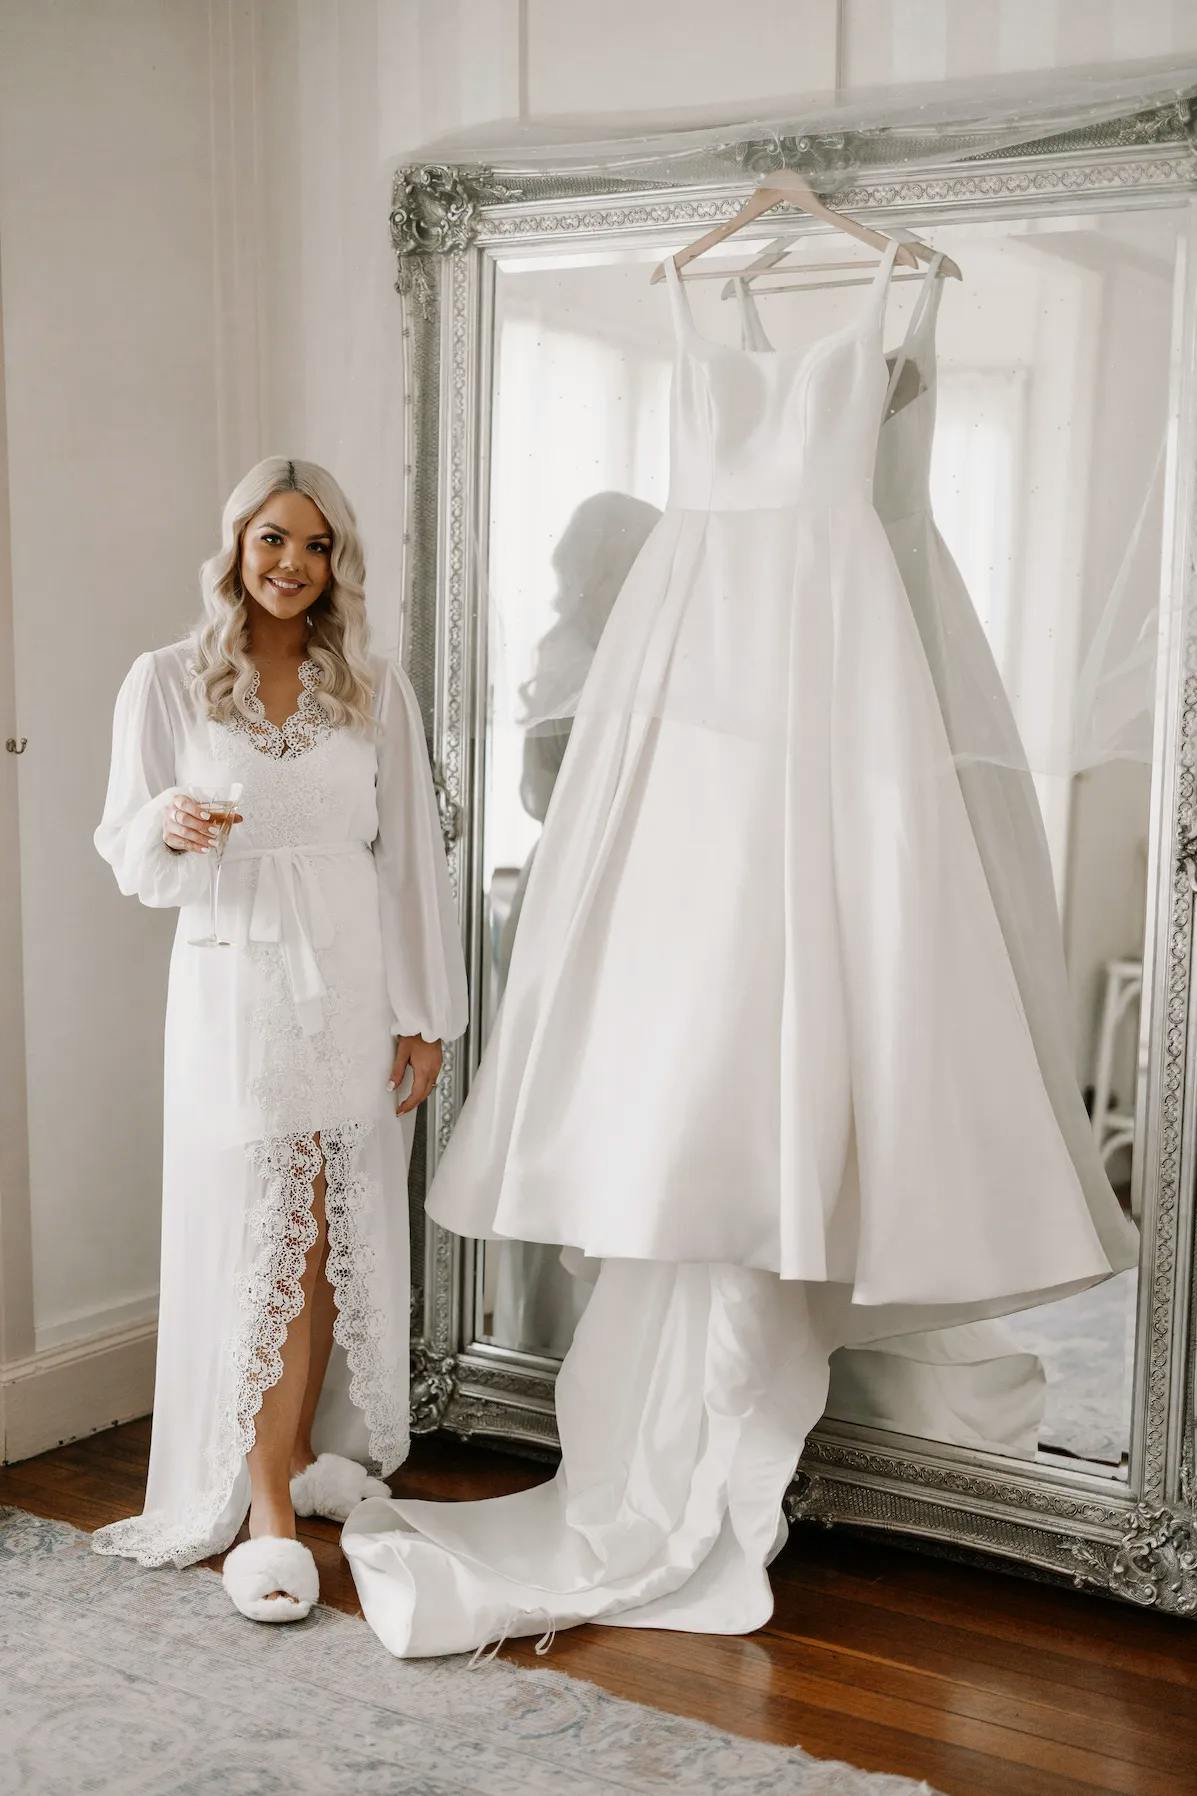 Bride standing next to wedding dress hanging on mirror